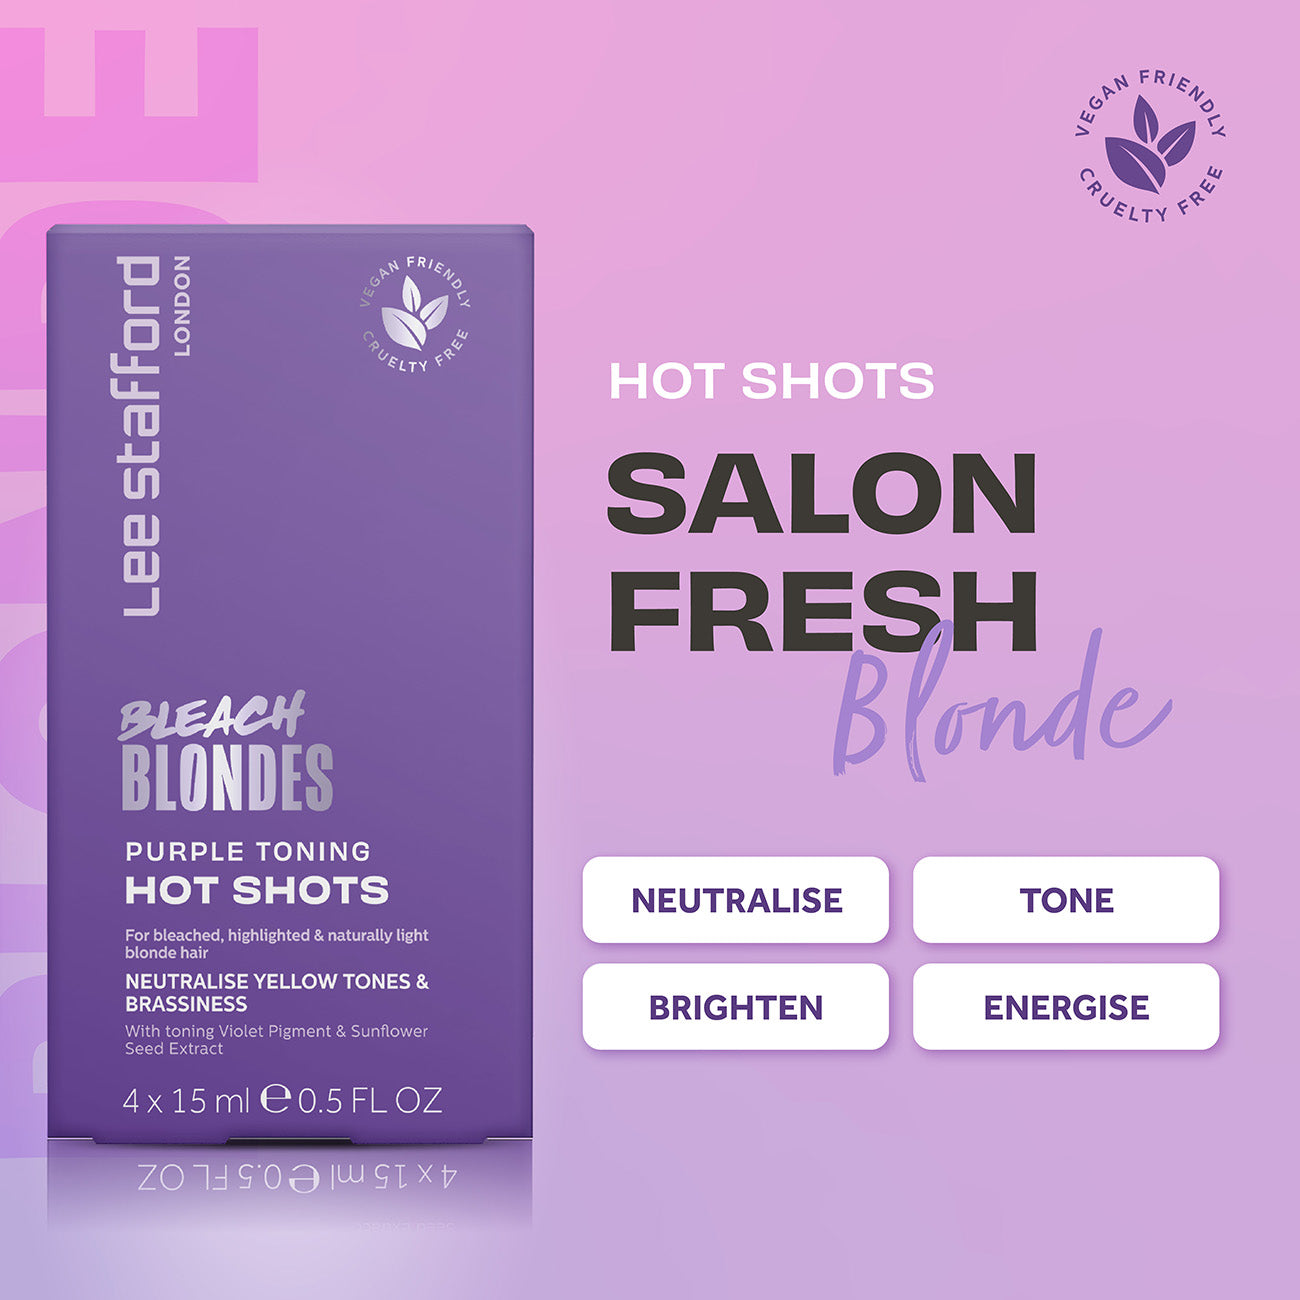 Bleach Blondes Purple Toning Hot Shots